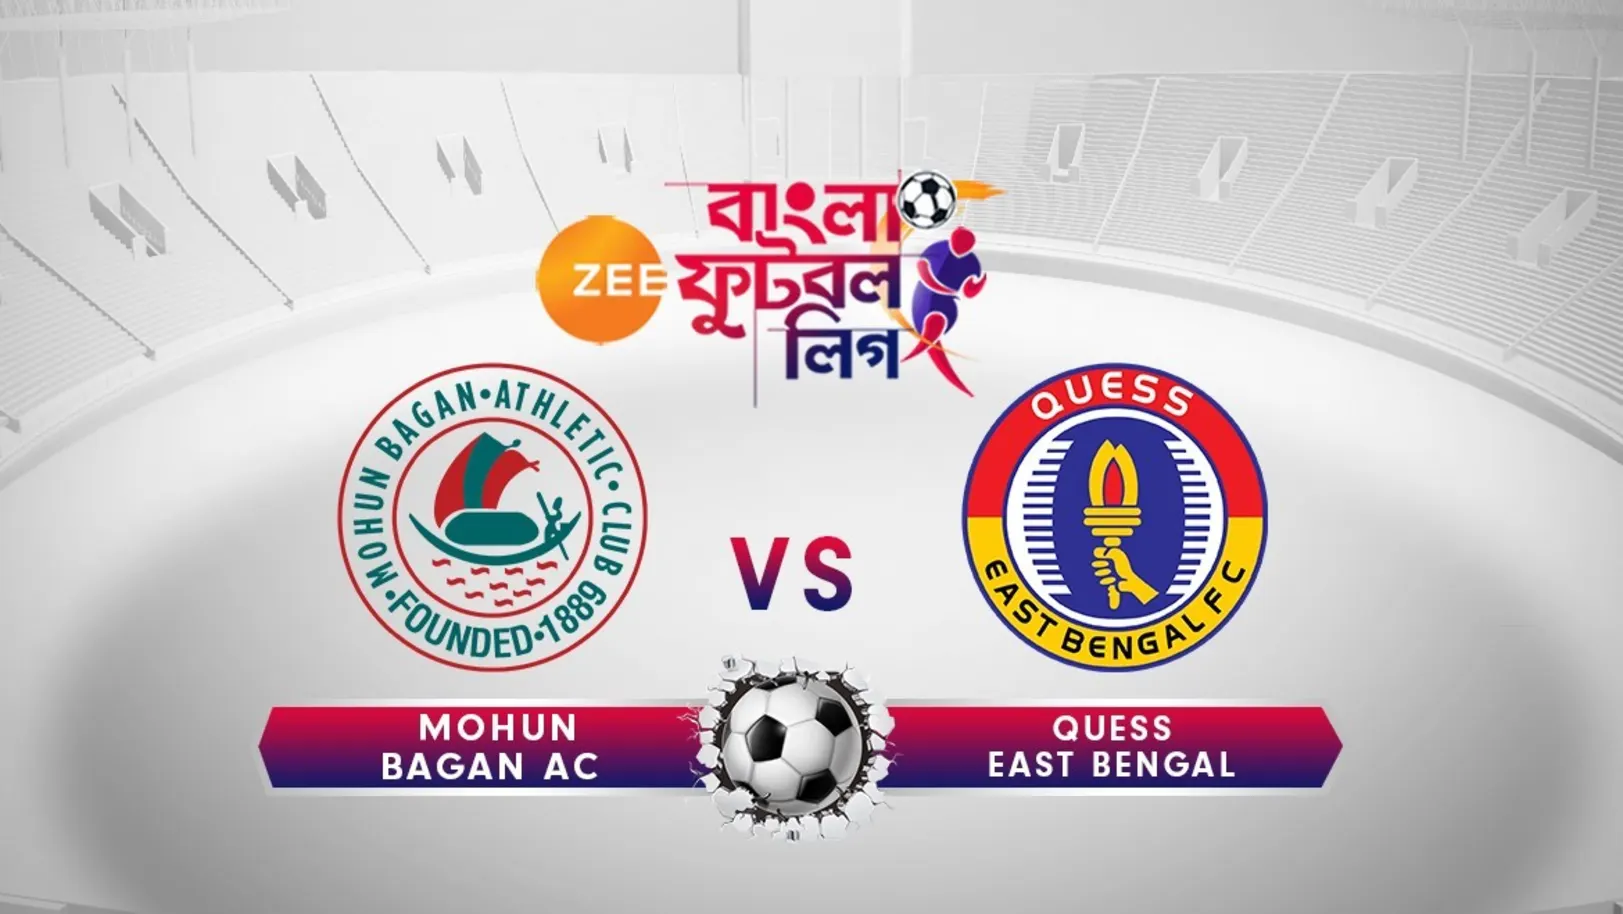 Mohun Bagan v/s Quess East Bengal - June 23 - ZBFL 2019 Episode 42